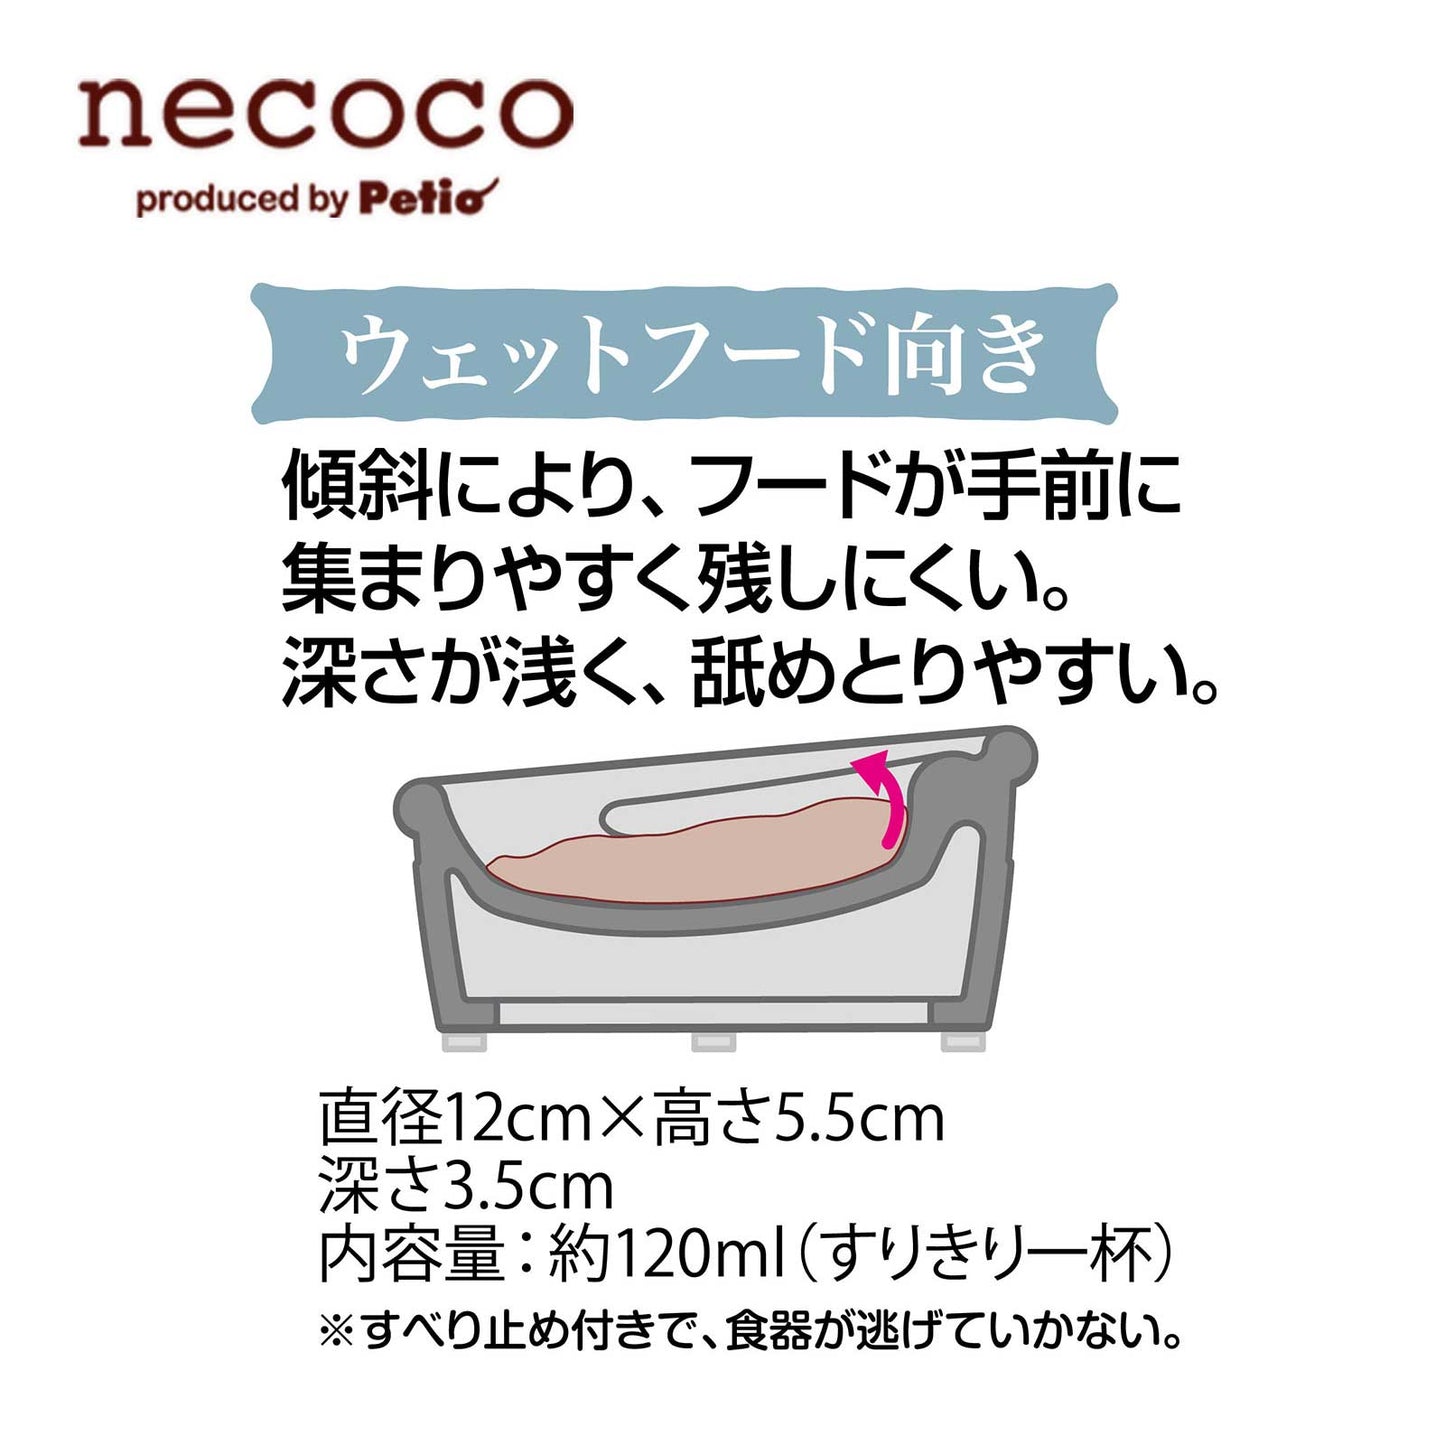 Petio Necoco Wood Grain Ceramic Cat Inclined Feeding Bowl - Wet Food